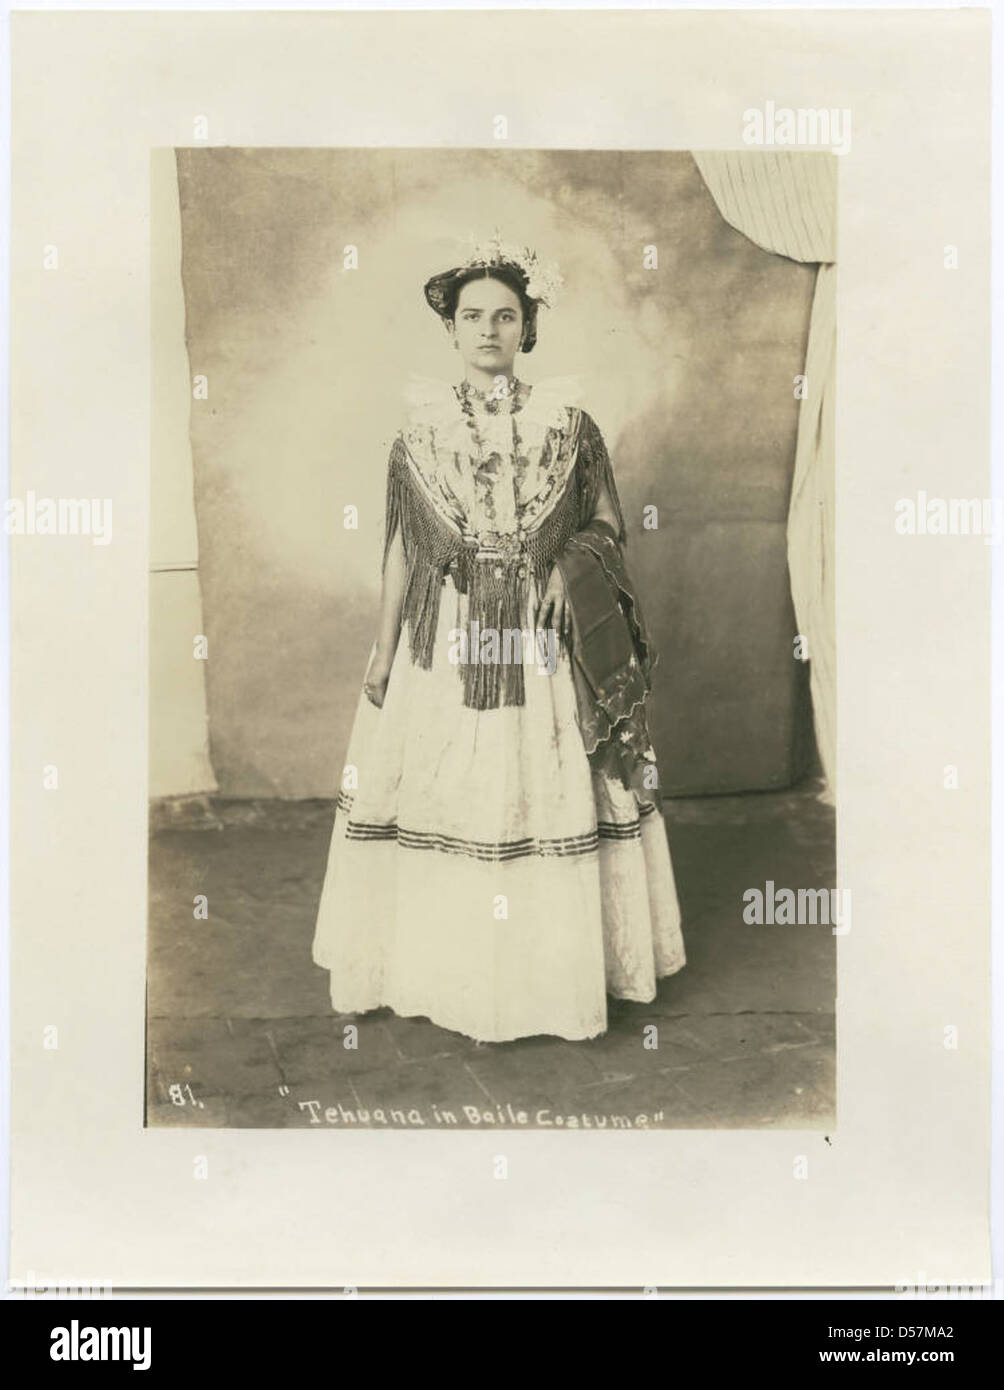 Tehuana in baile costume Stock Photo